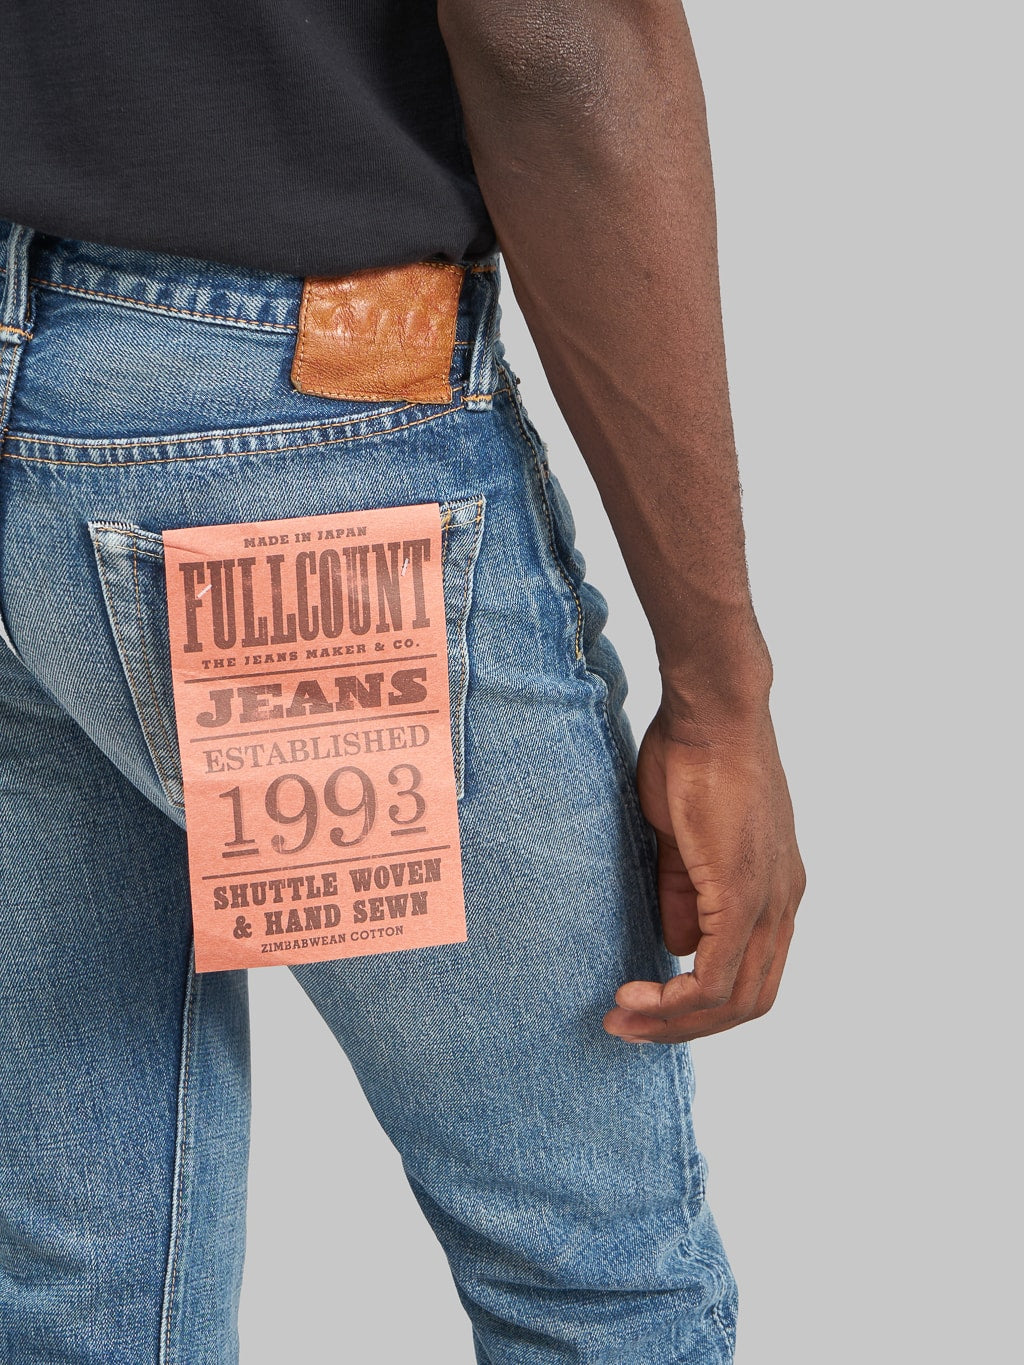 Fullcount 1108 Dartford Slim Straight Jeans label patch